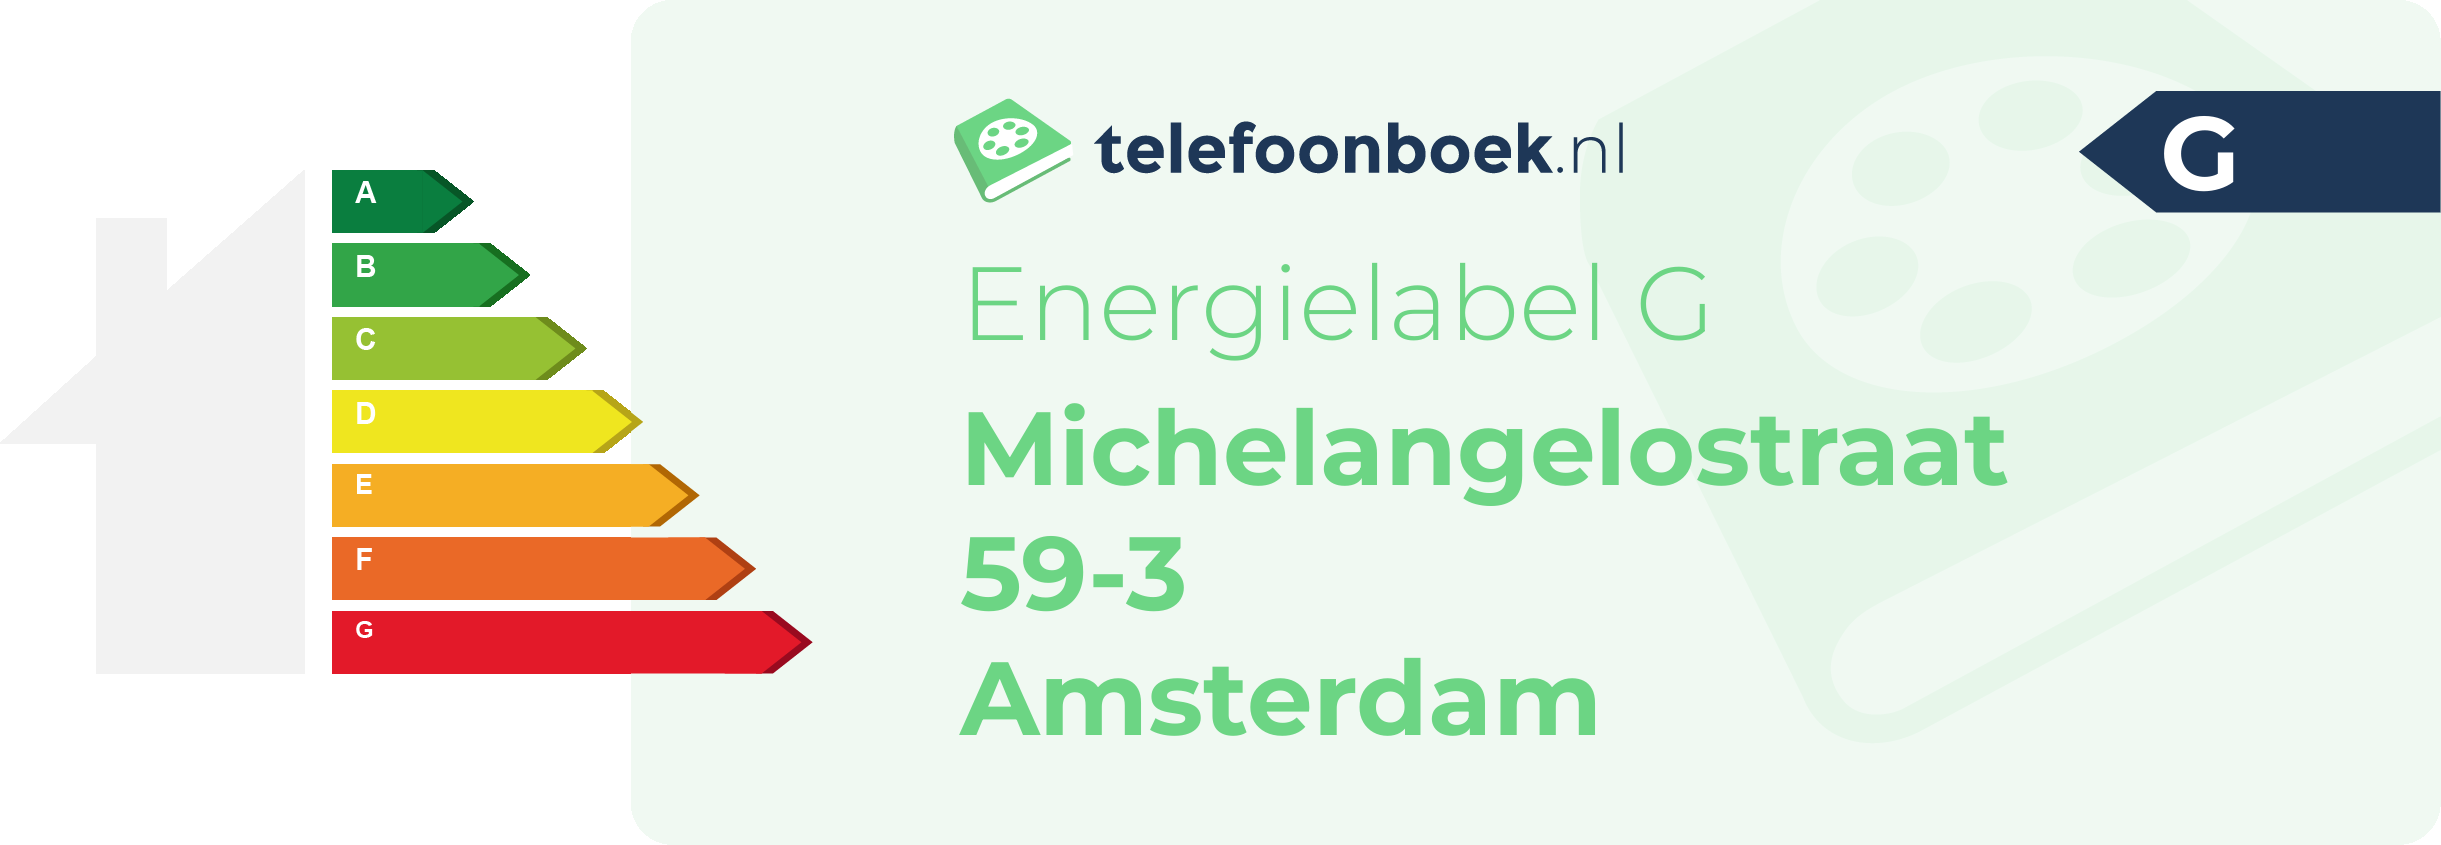 Energielabel Michelangelostraat 59-3 Amsterdam